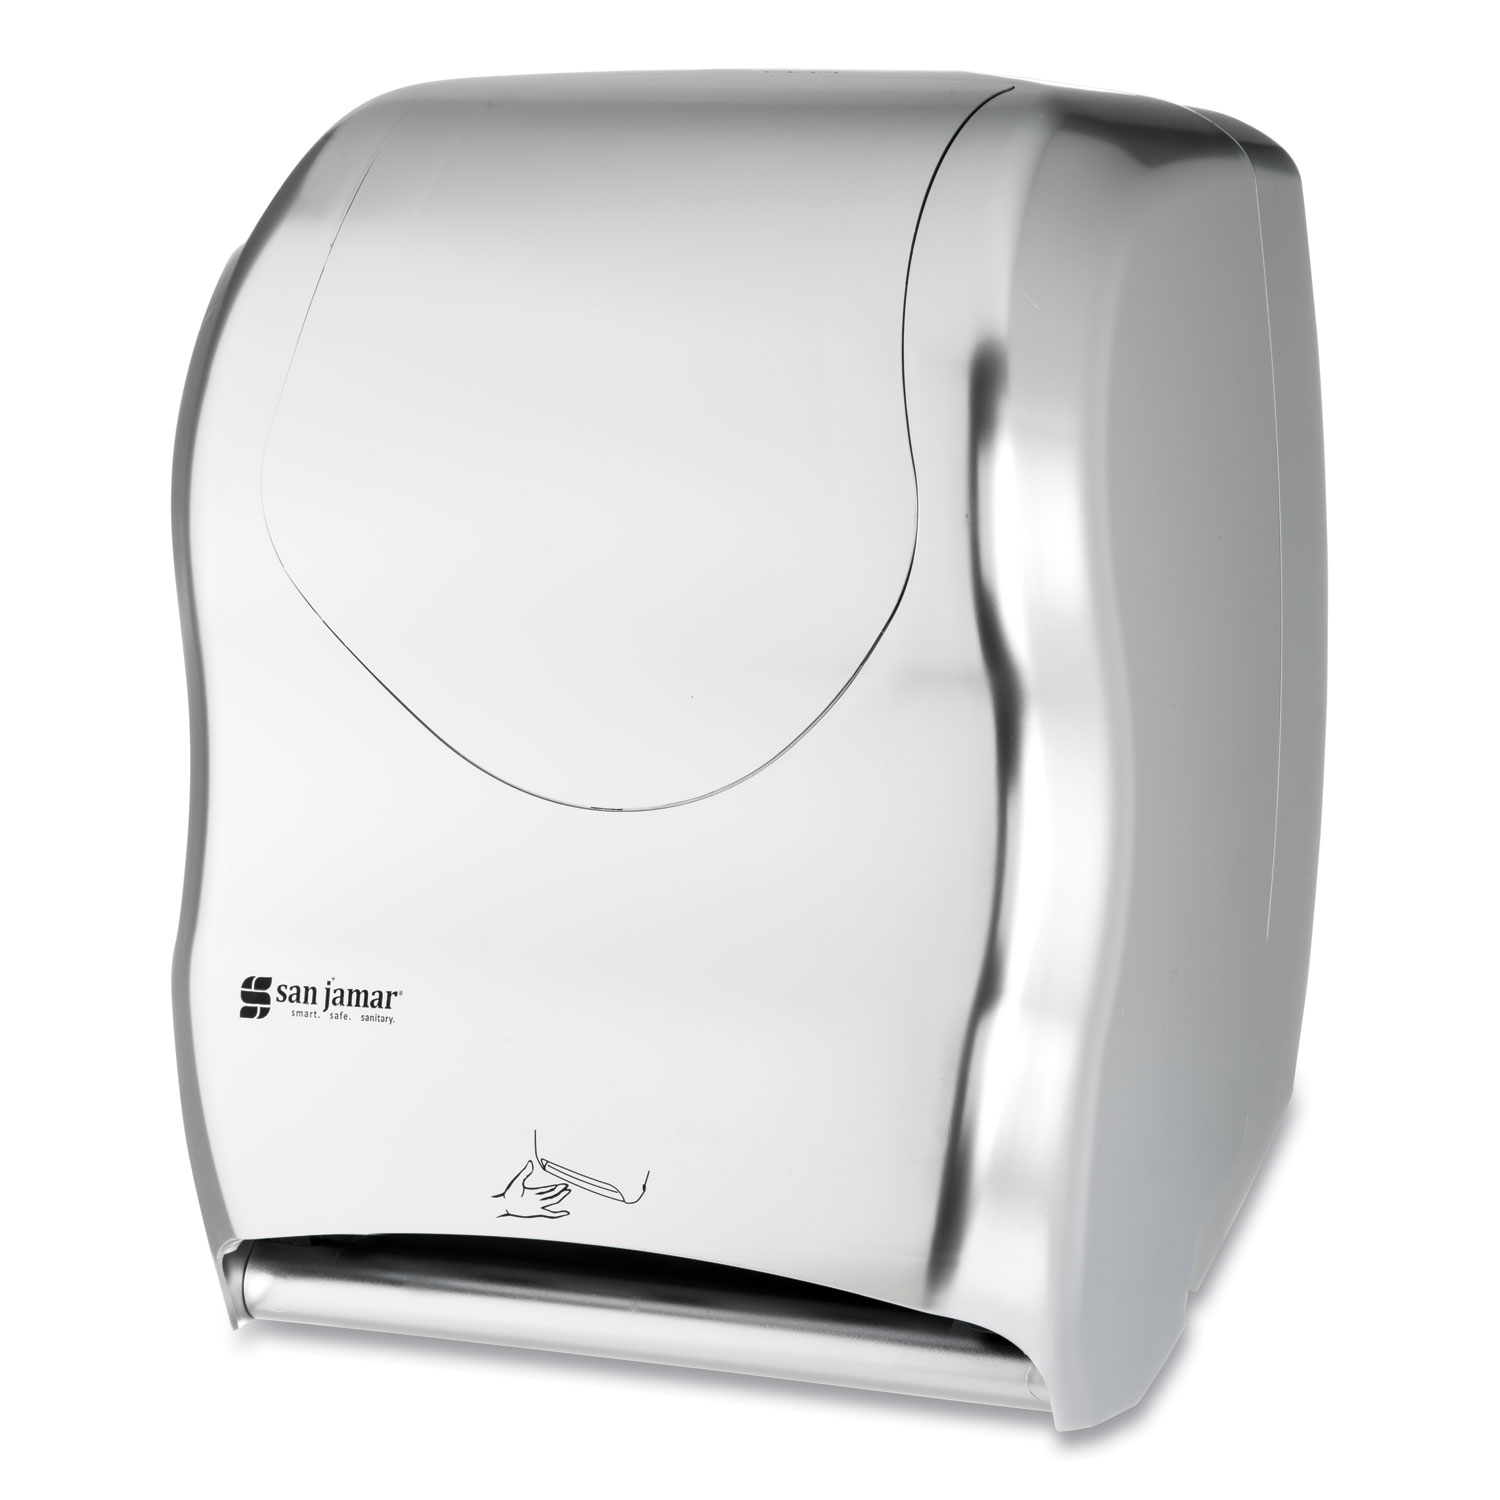 Smart System with iQ Sensor Towel Dispenser, 11.75 x 9.25 x 16.5